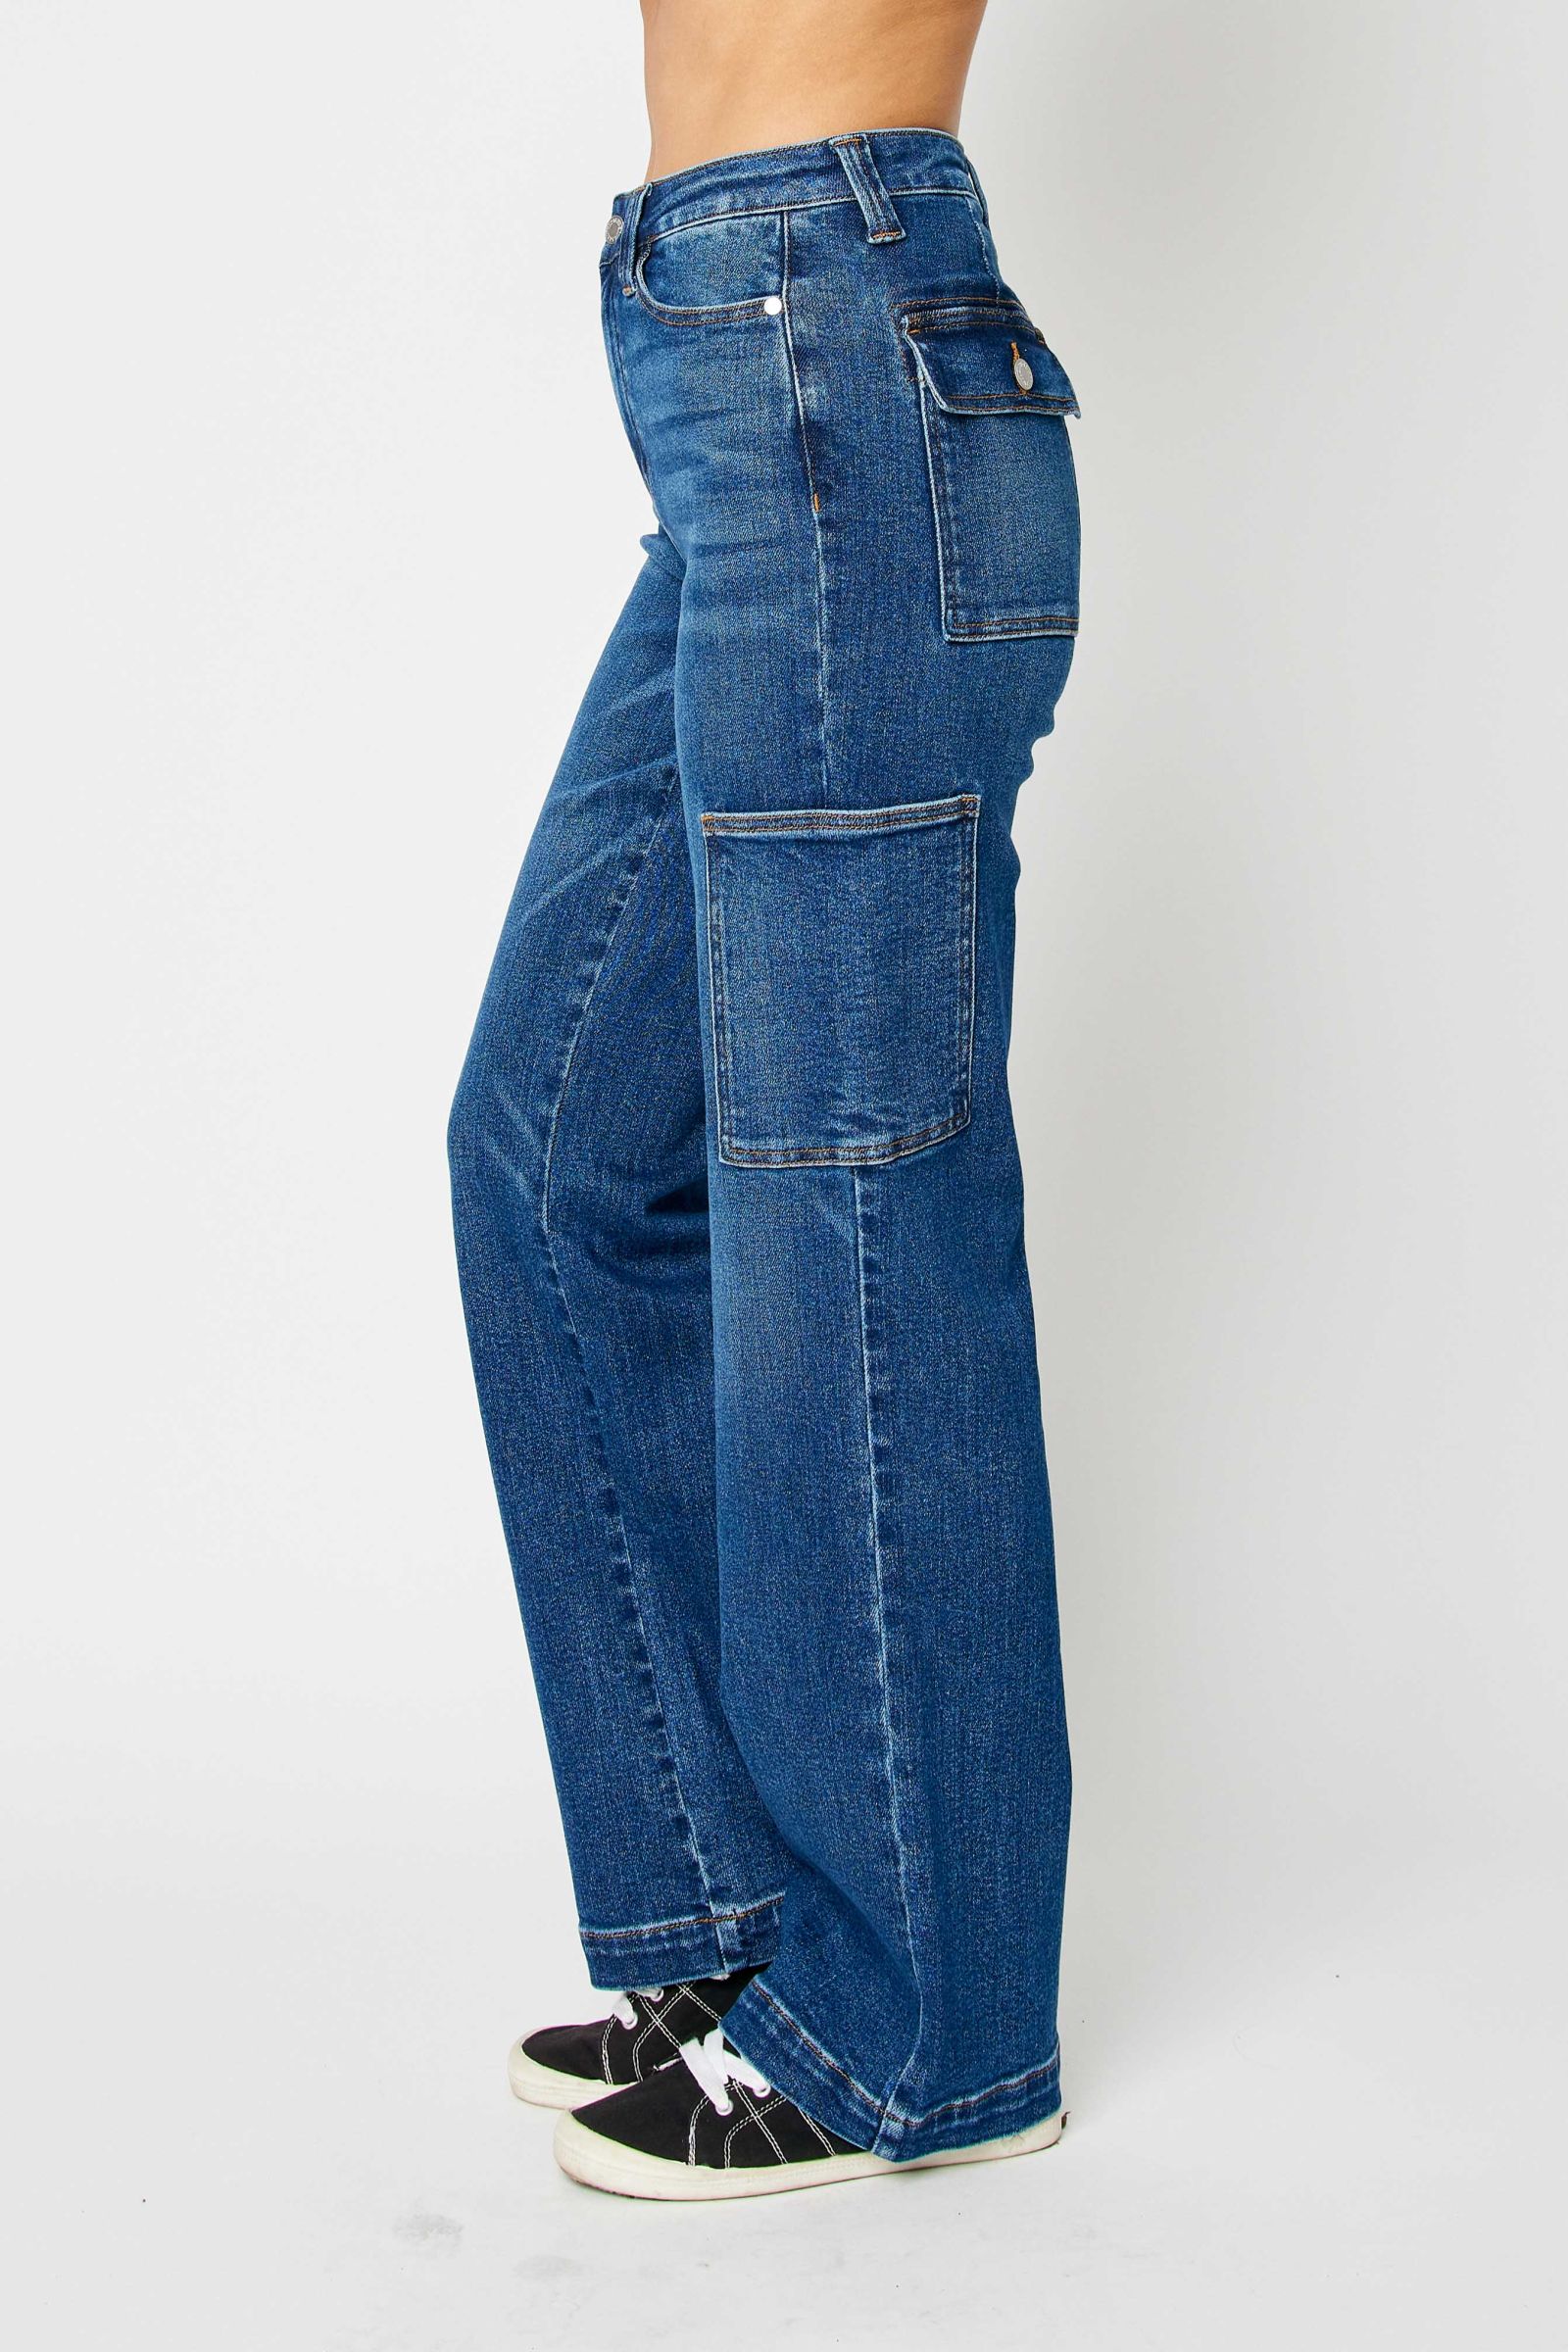 Judy Blue Jeans 88725